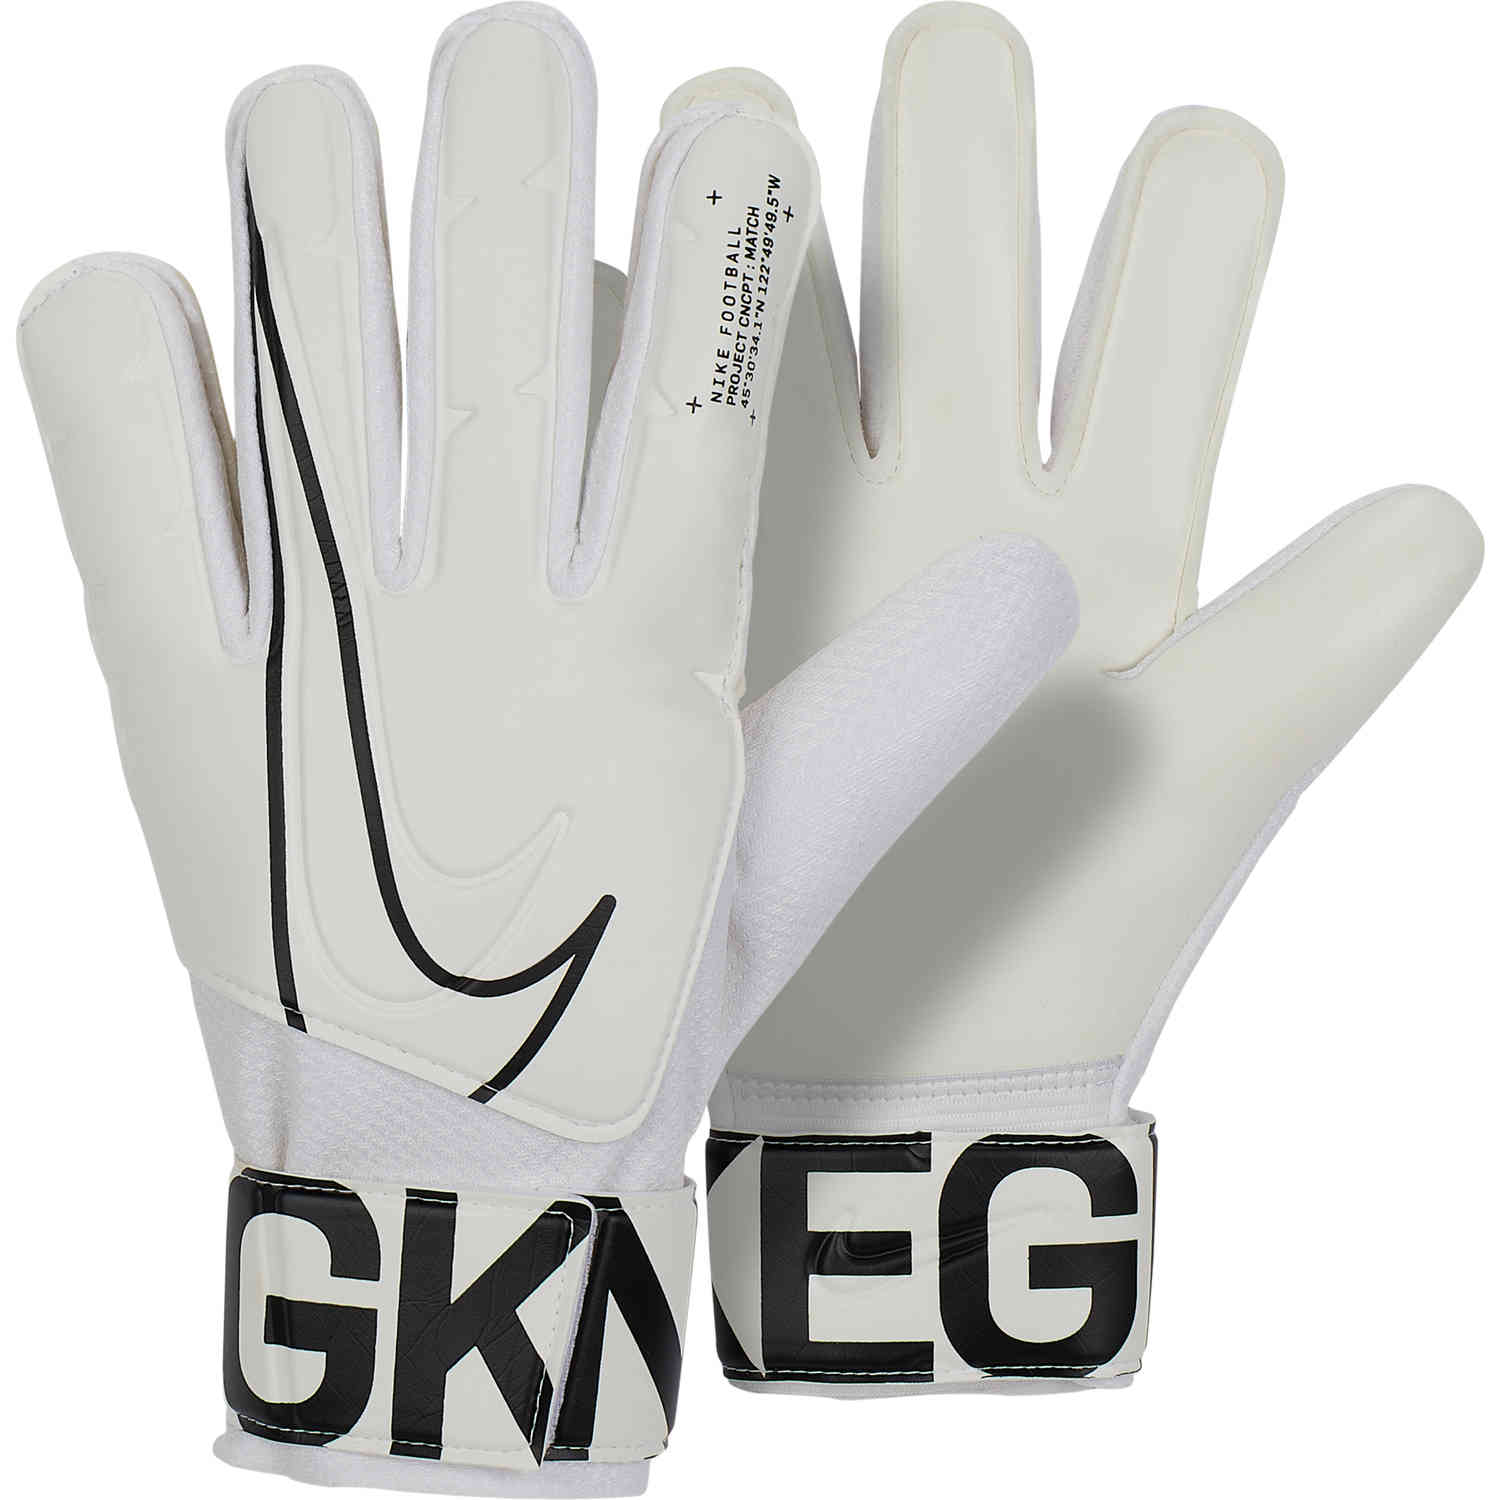 nike football goalkeeper gloves cheap 